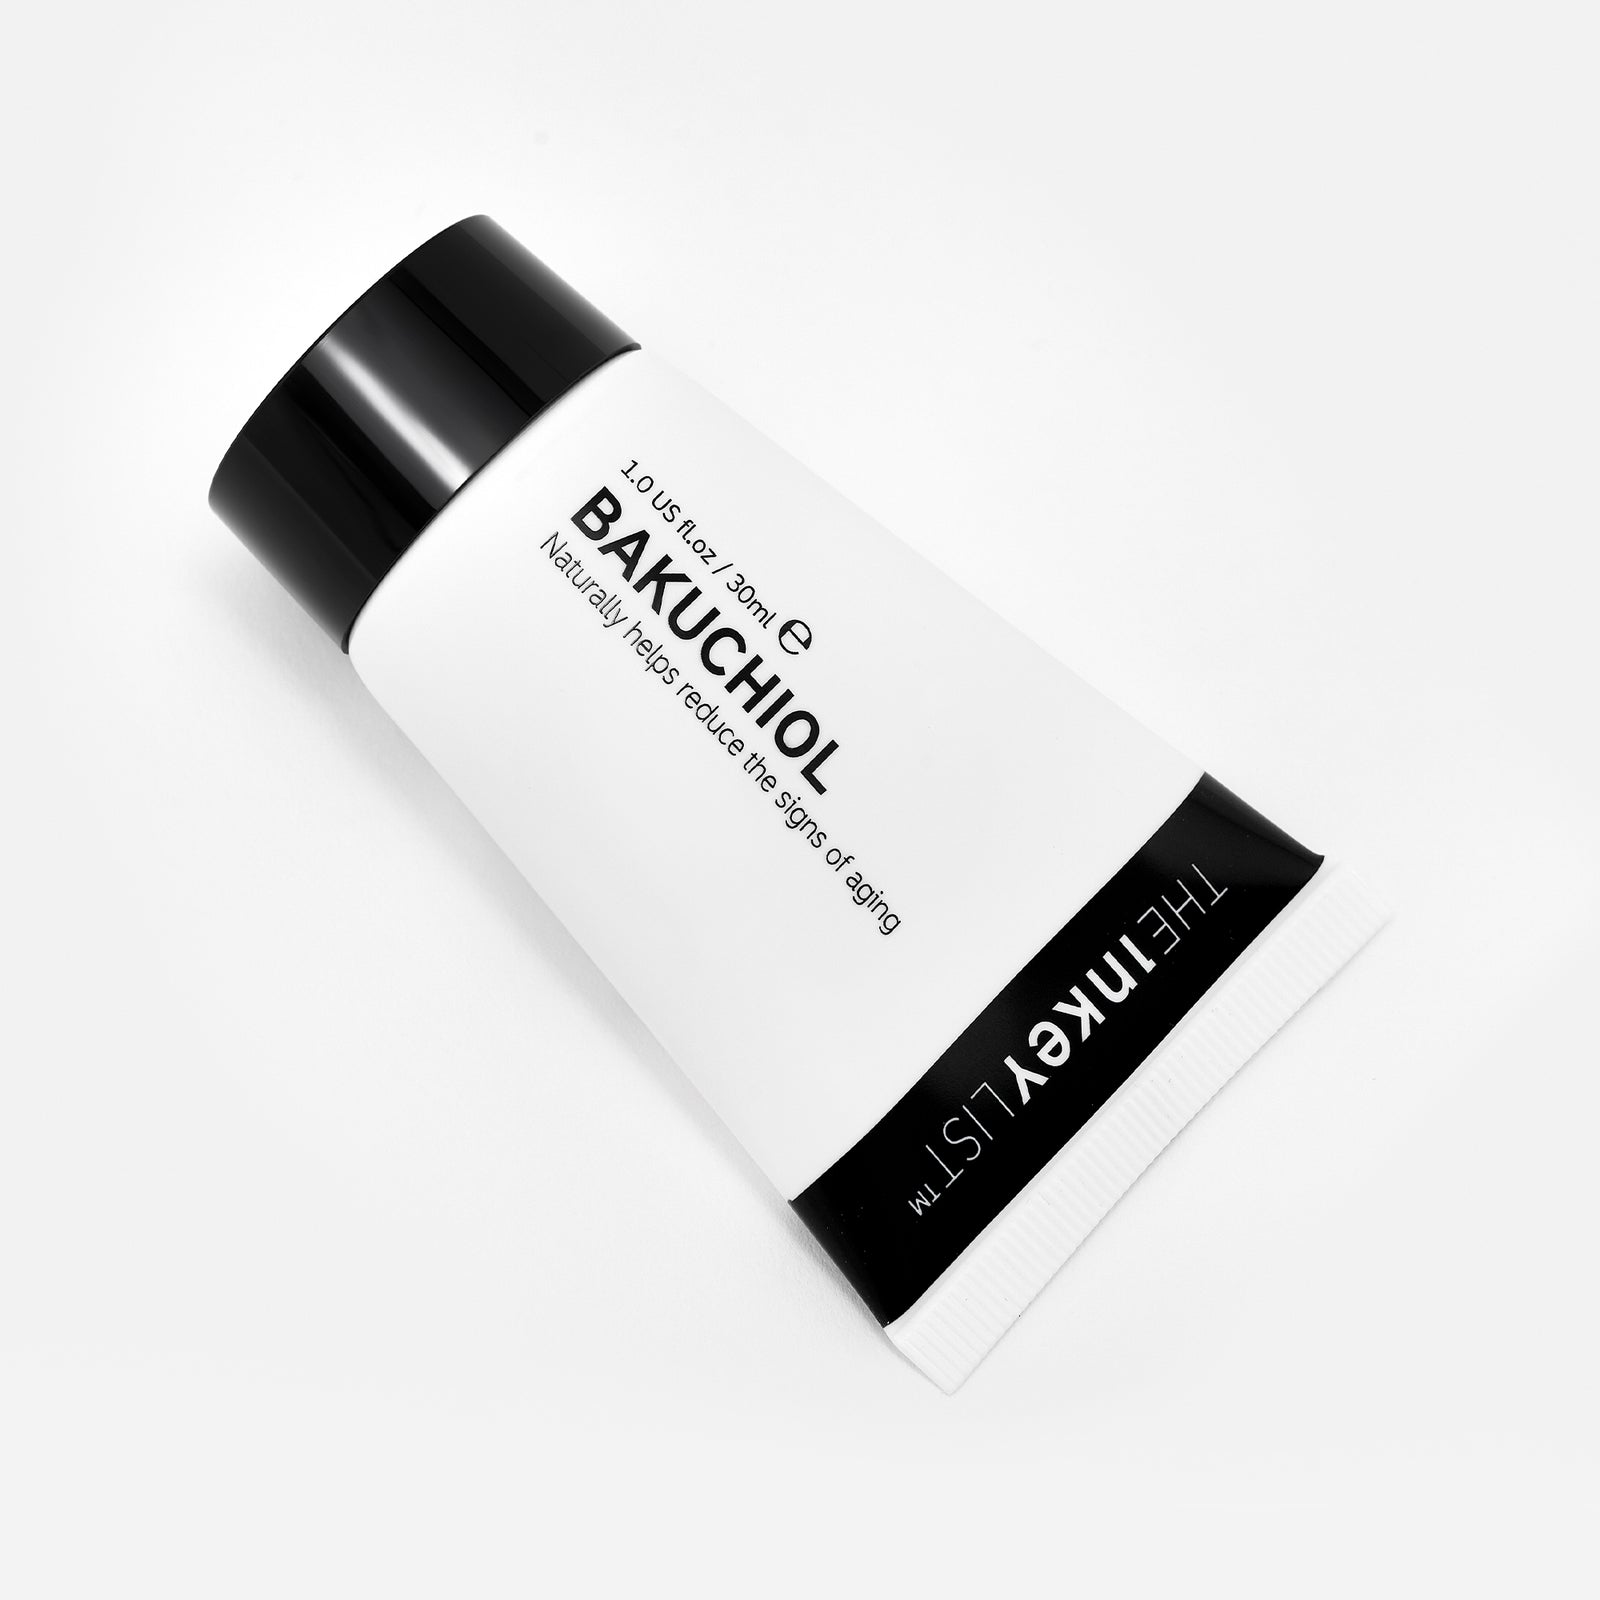 Bakuchiol Moisturiser product shot on white background